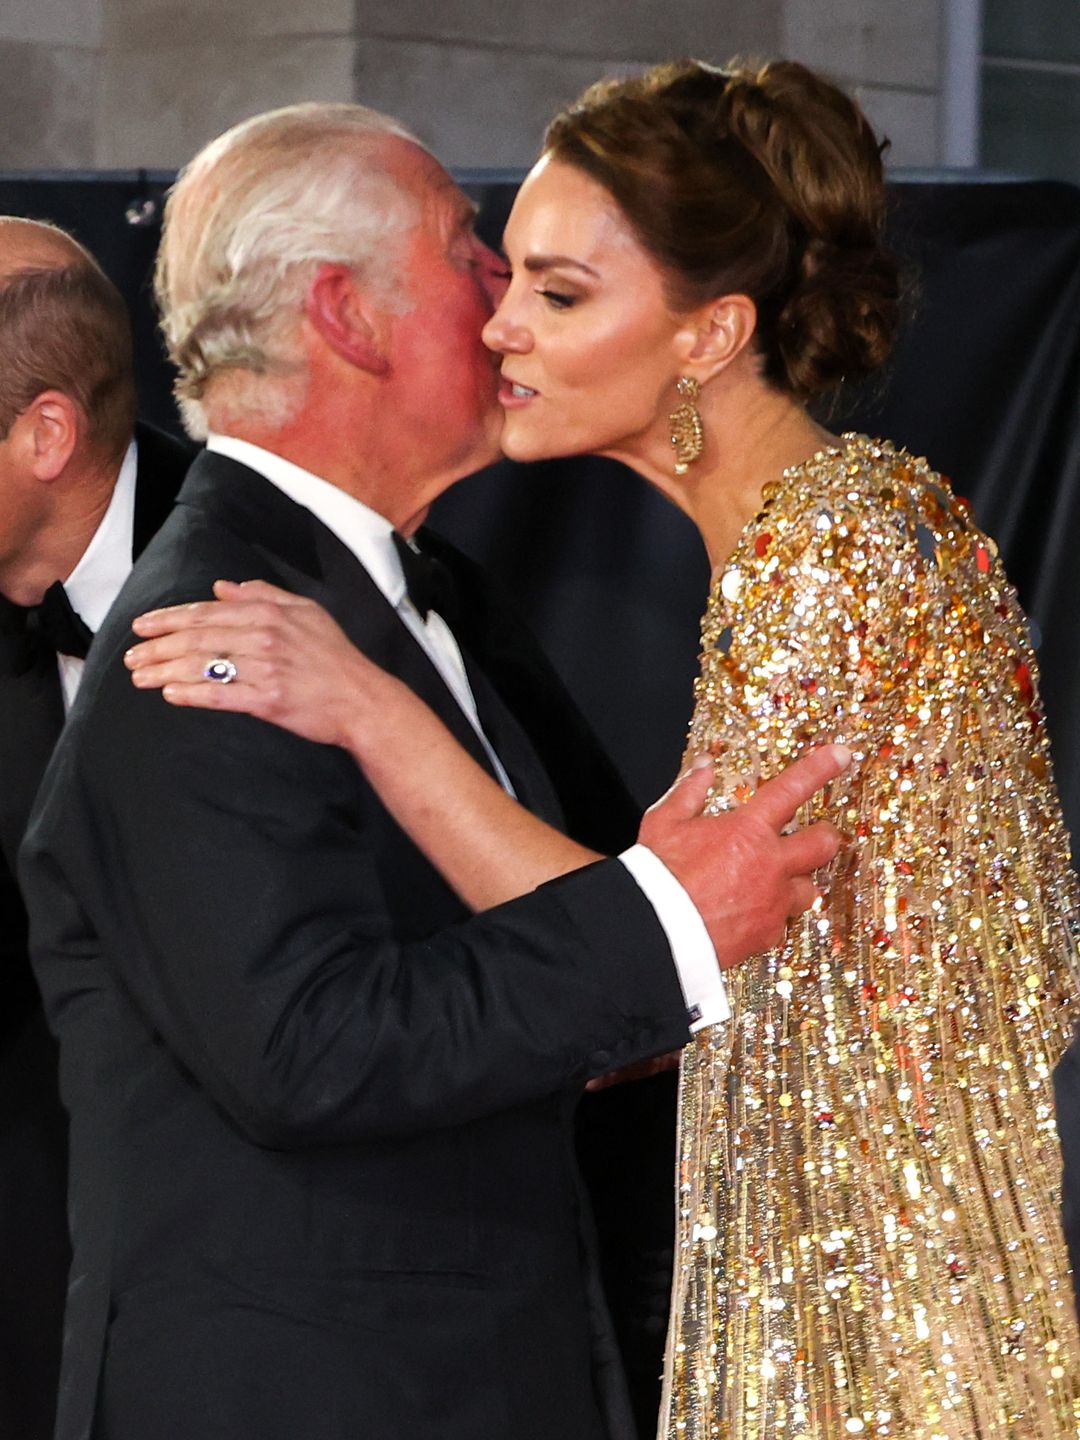 King Charles kisses Kate Middleton at James Bond premiere